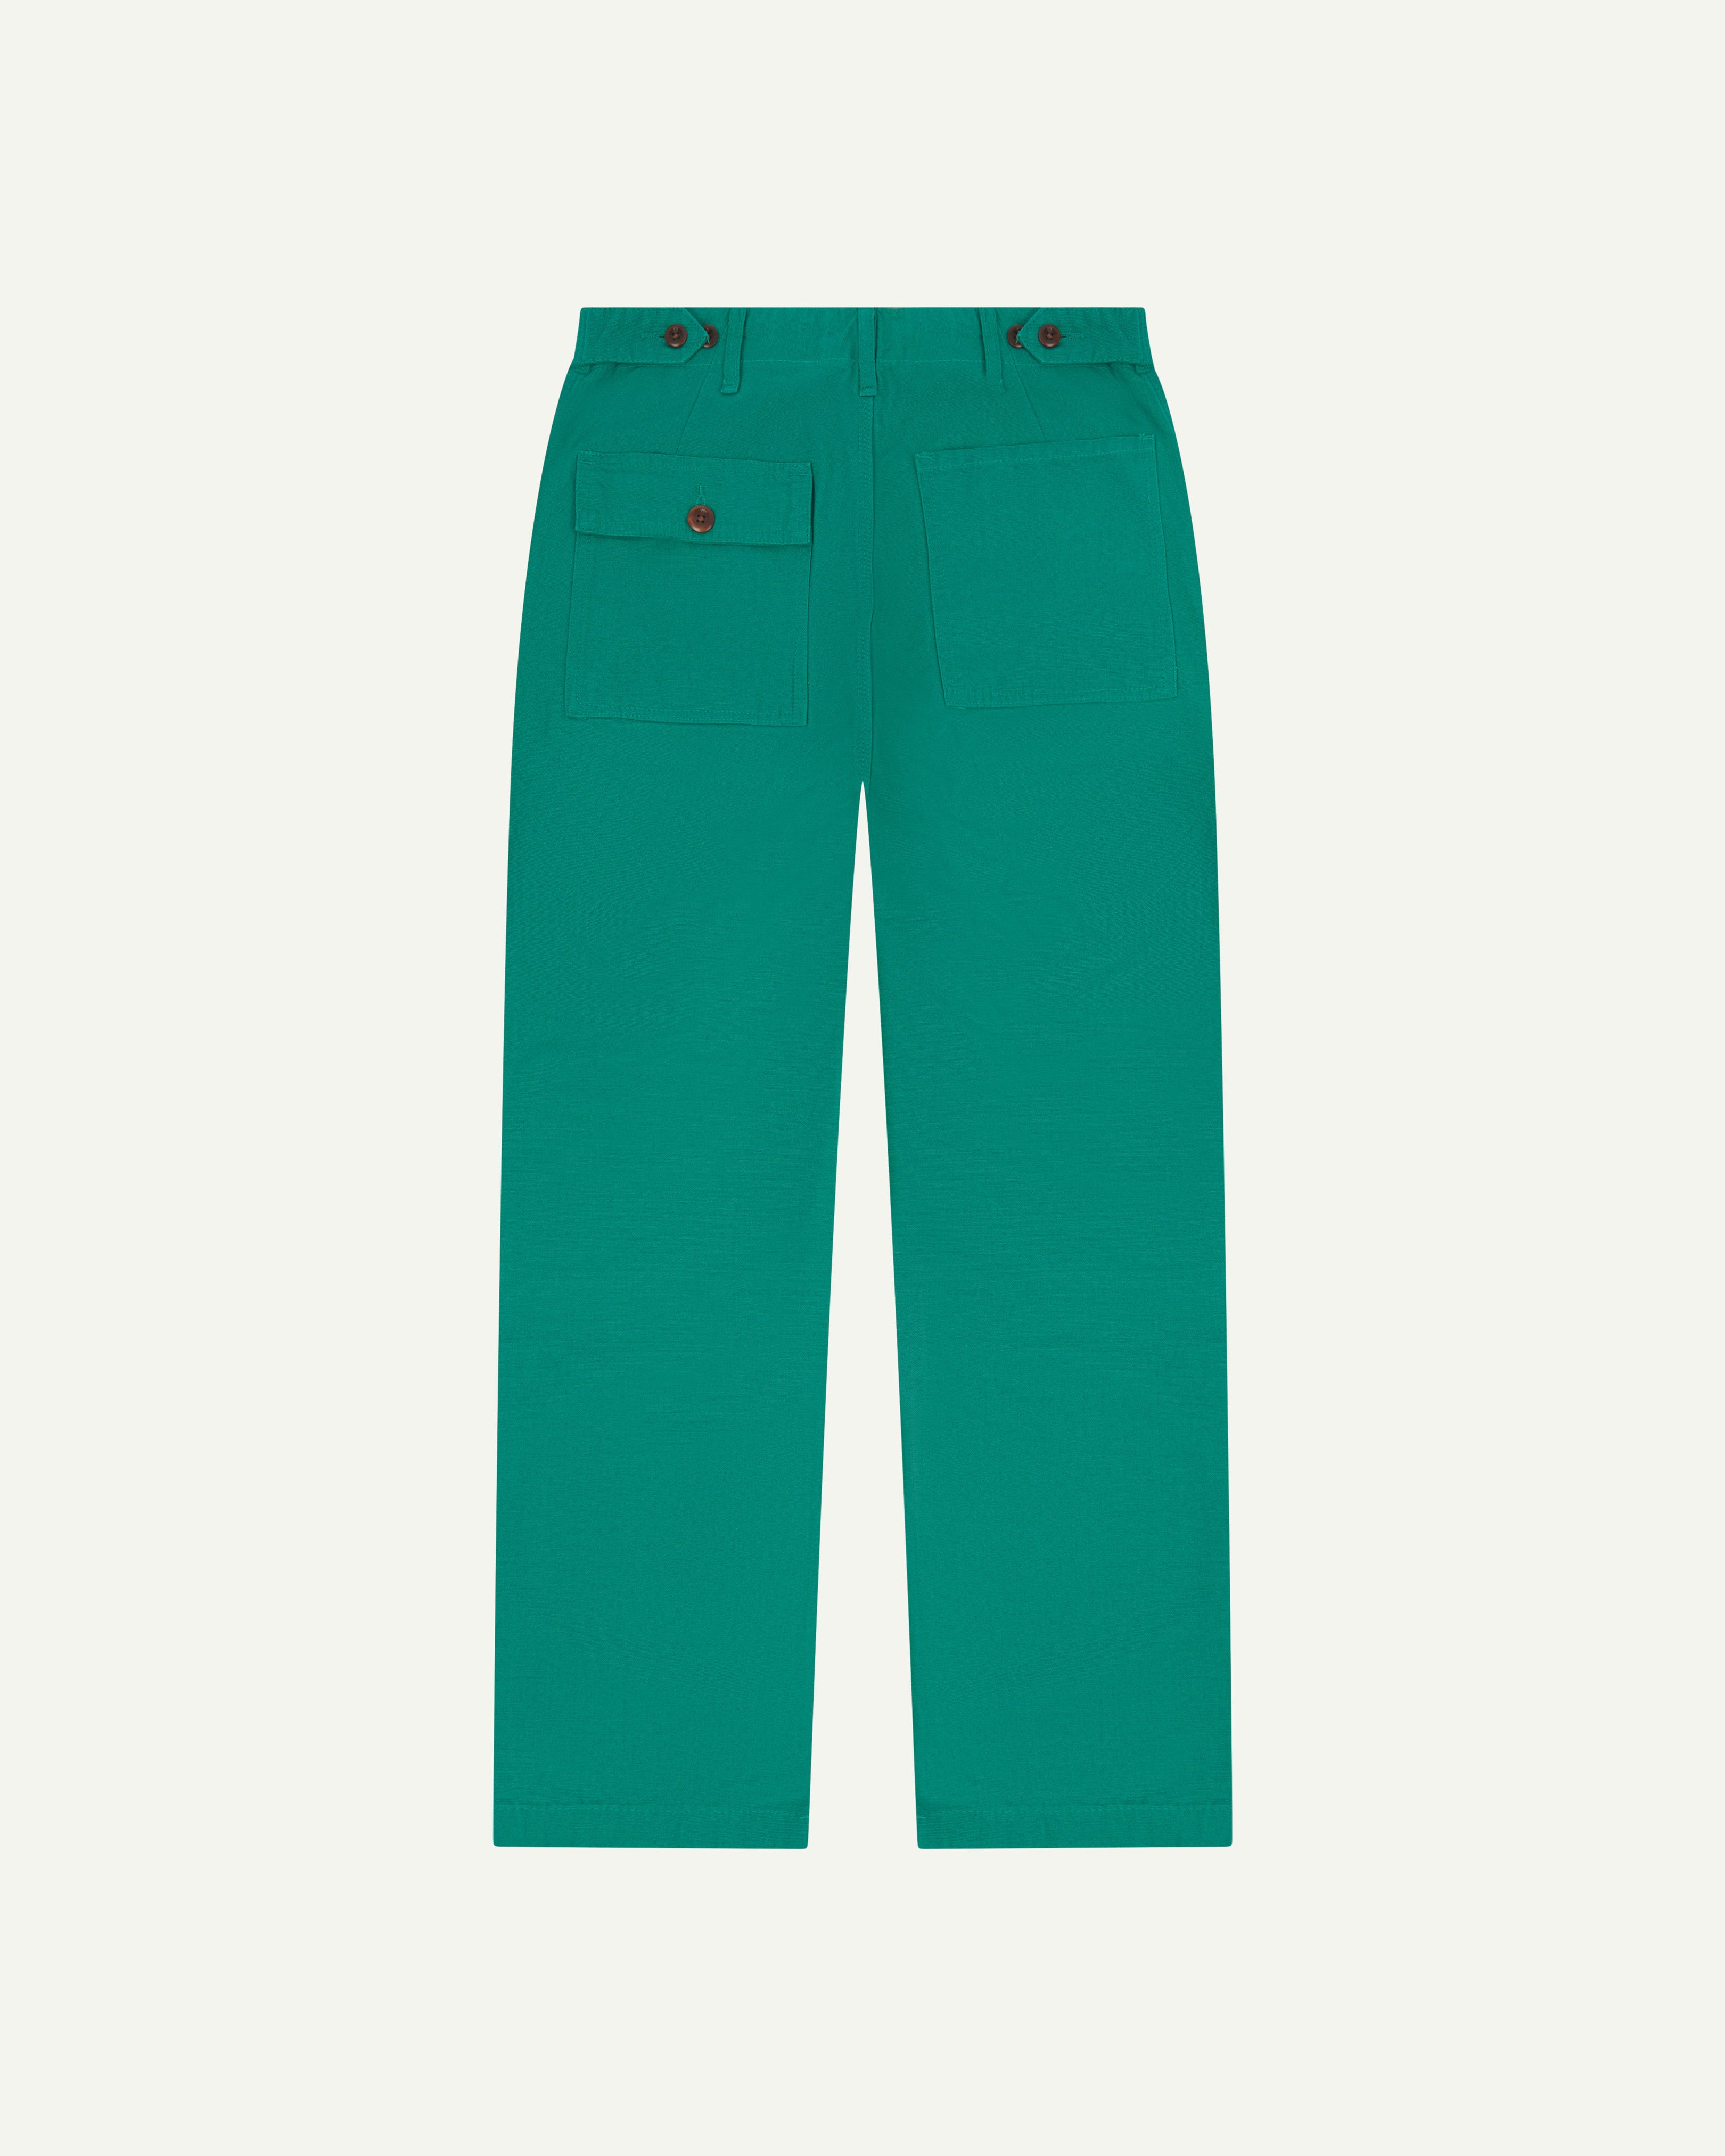 The Uskees #5005 Men's Workwear Pants - Vine Green